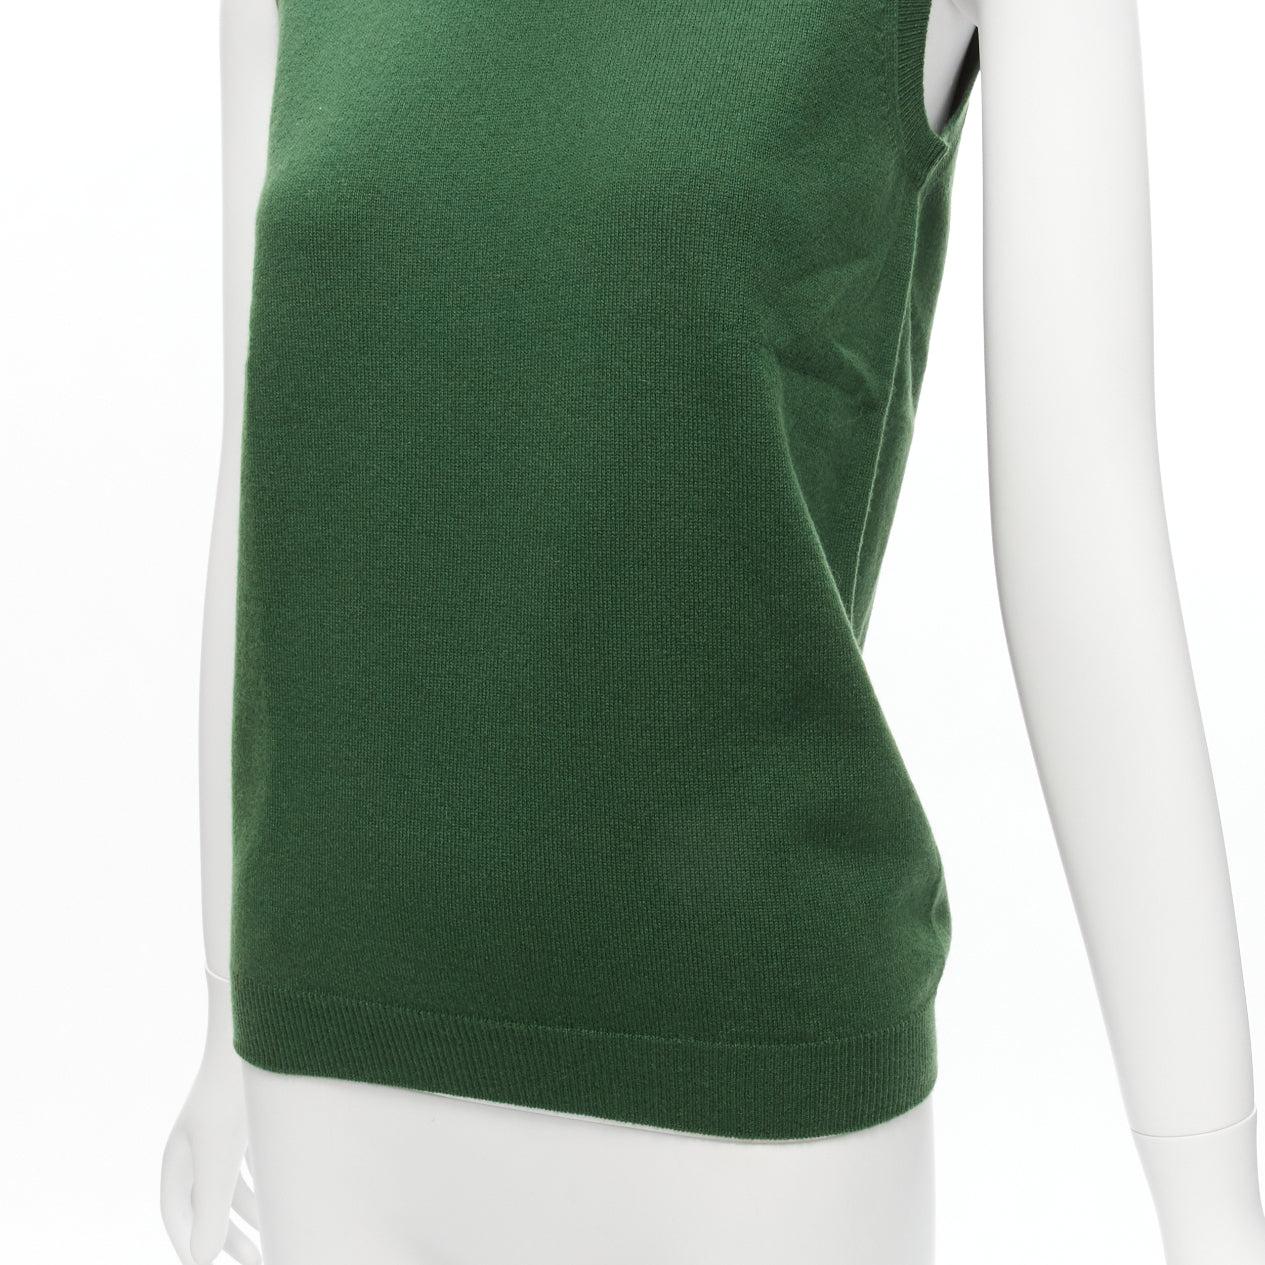 JIL SANDER 100% cashmere forest green crew neck sleeveless sweater vest FR34 XS For Sale 2